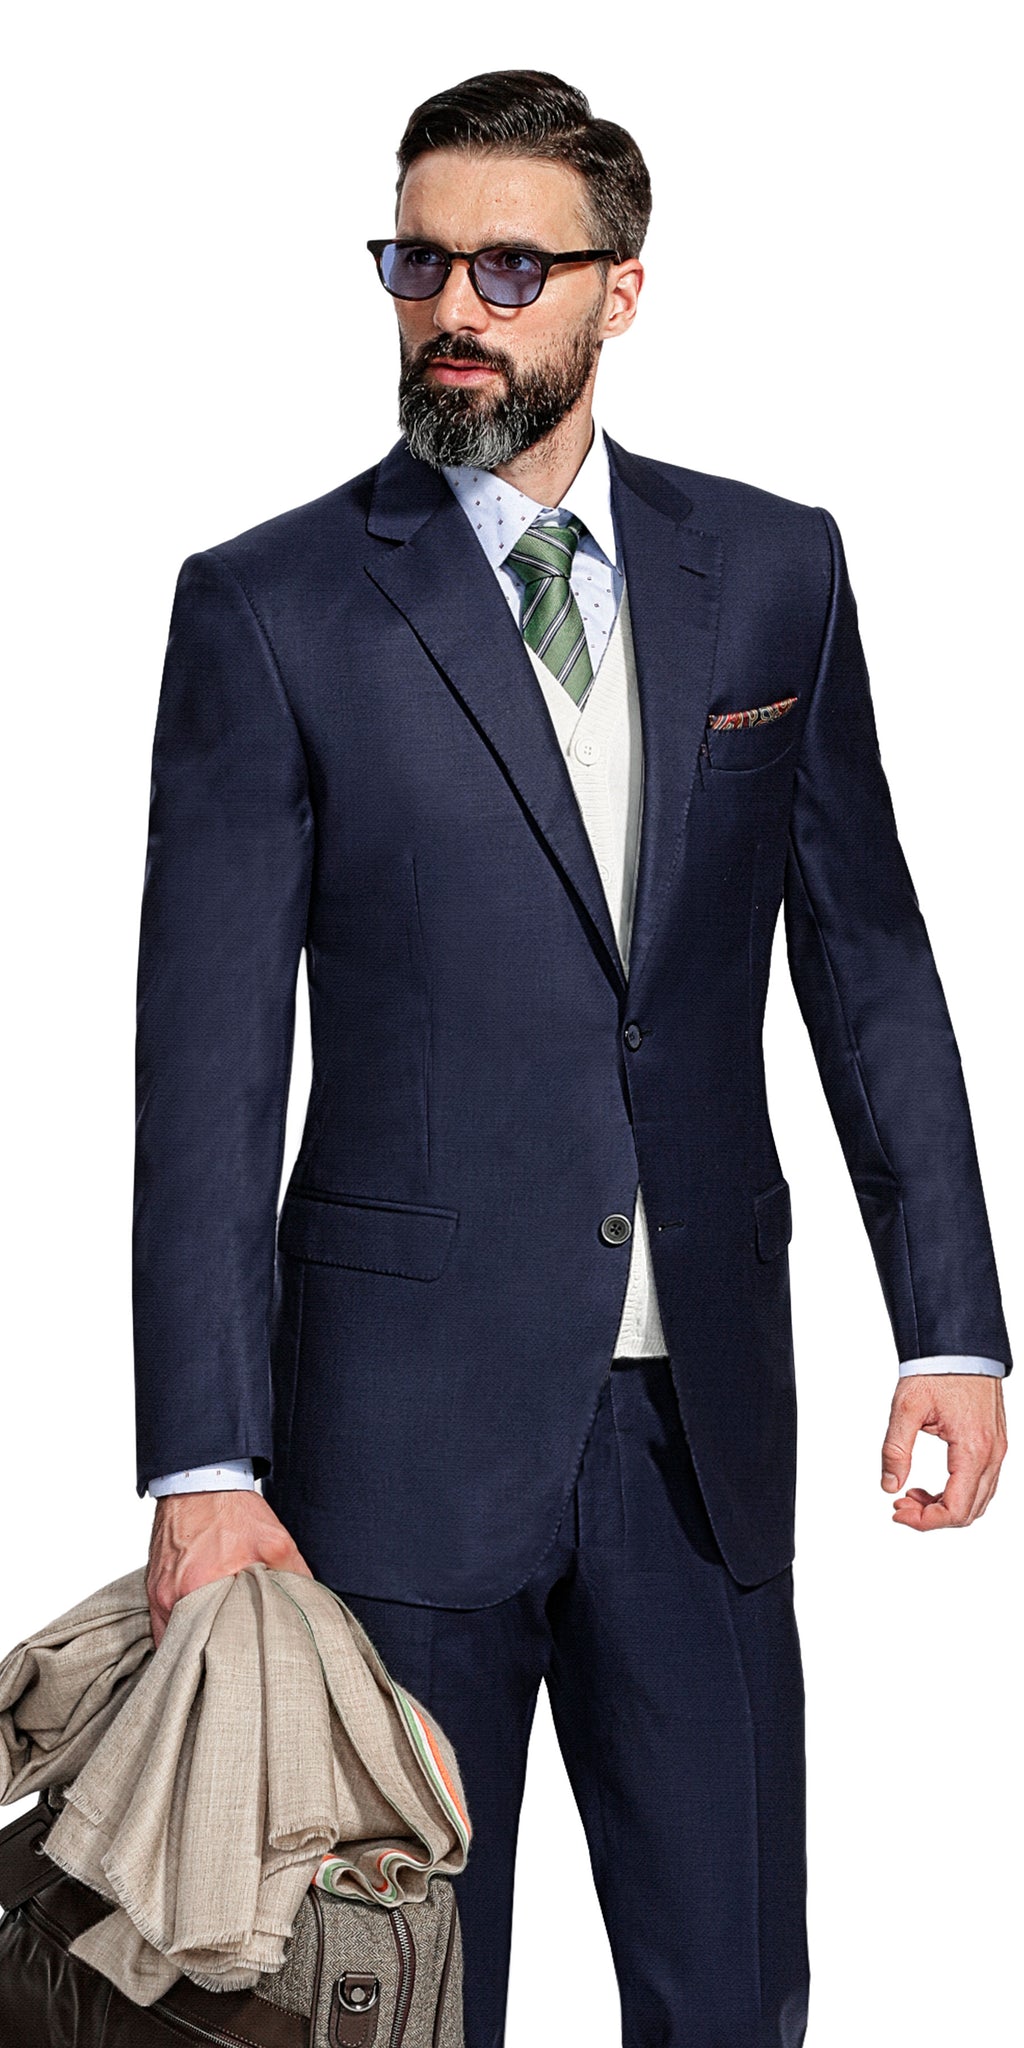 Praiano Monaco Blue Suit